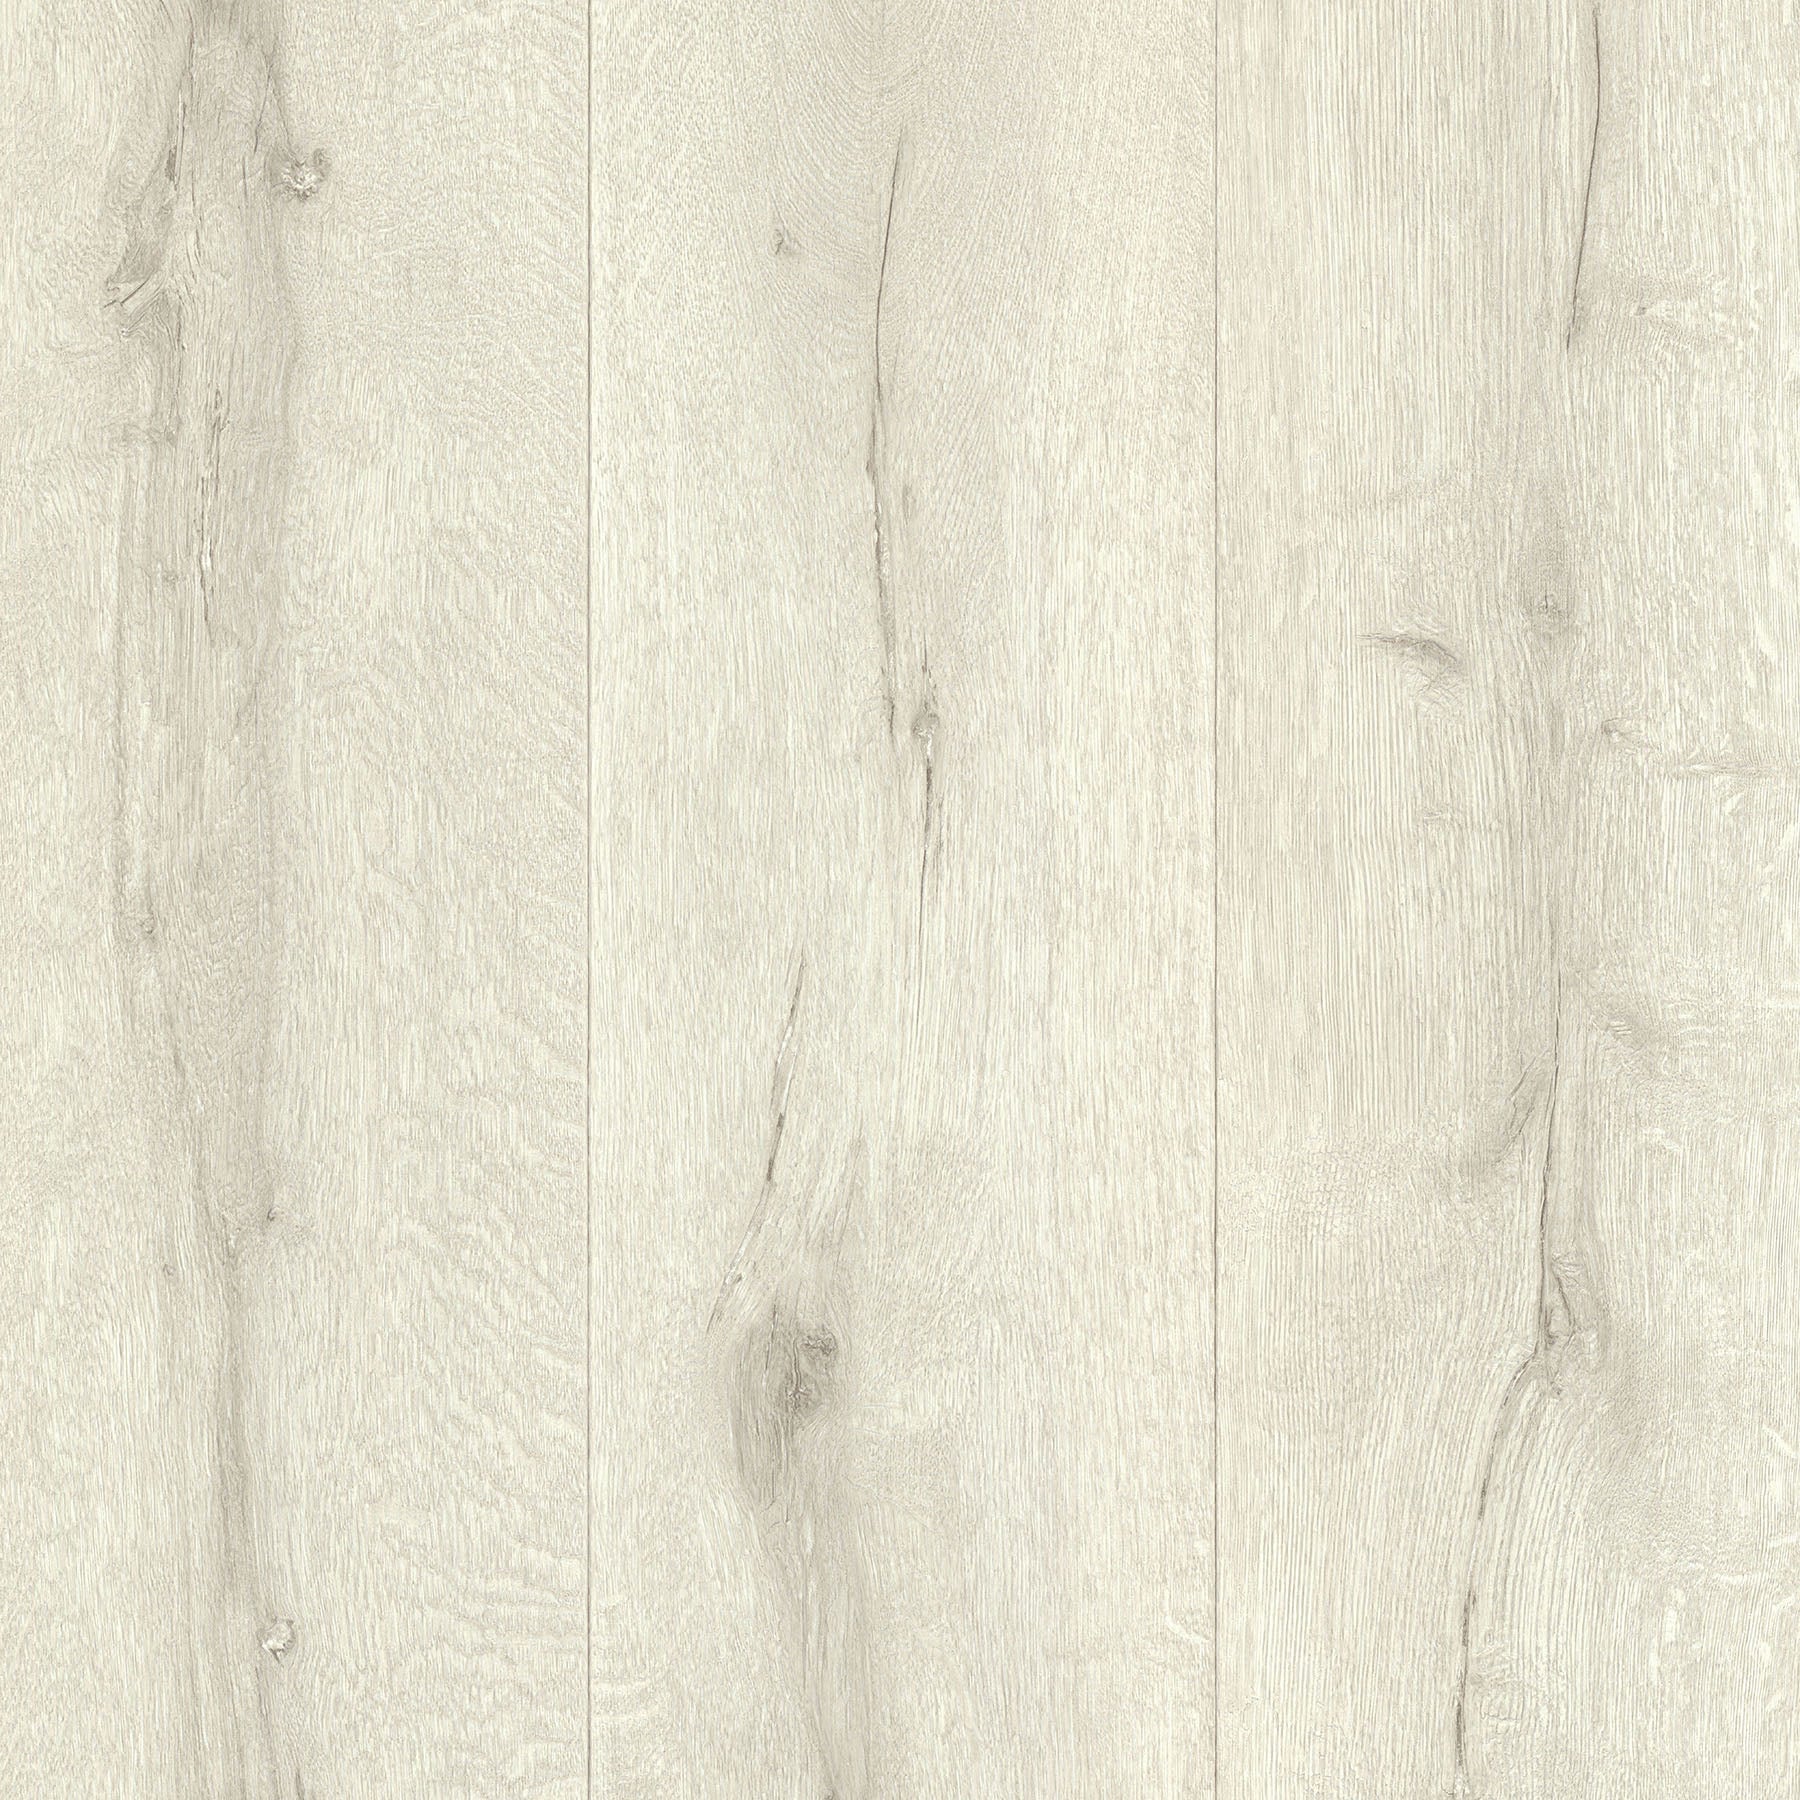 Acquire 2773-514407 Neutral Black White Whites & Off-Whites Wood Wallpaper by Advantage